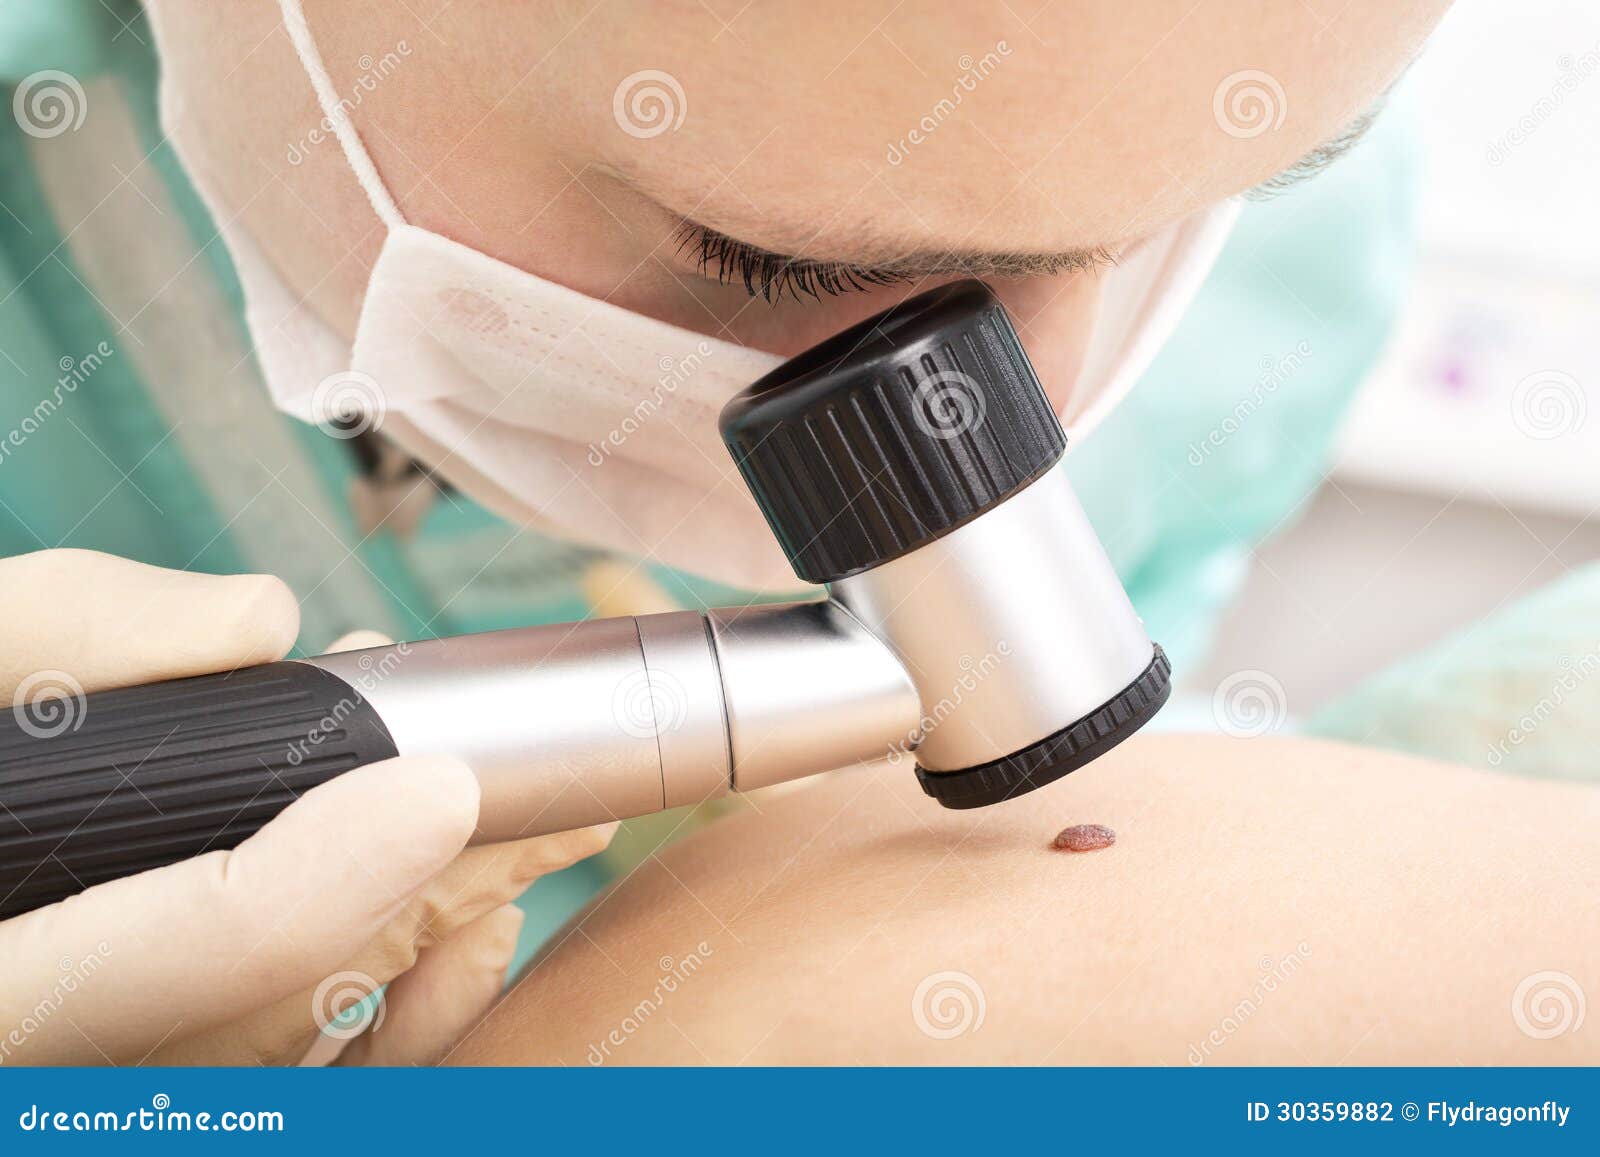 dermatologist examines birthmark with dermatoscope